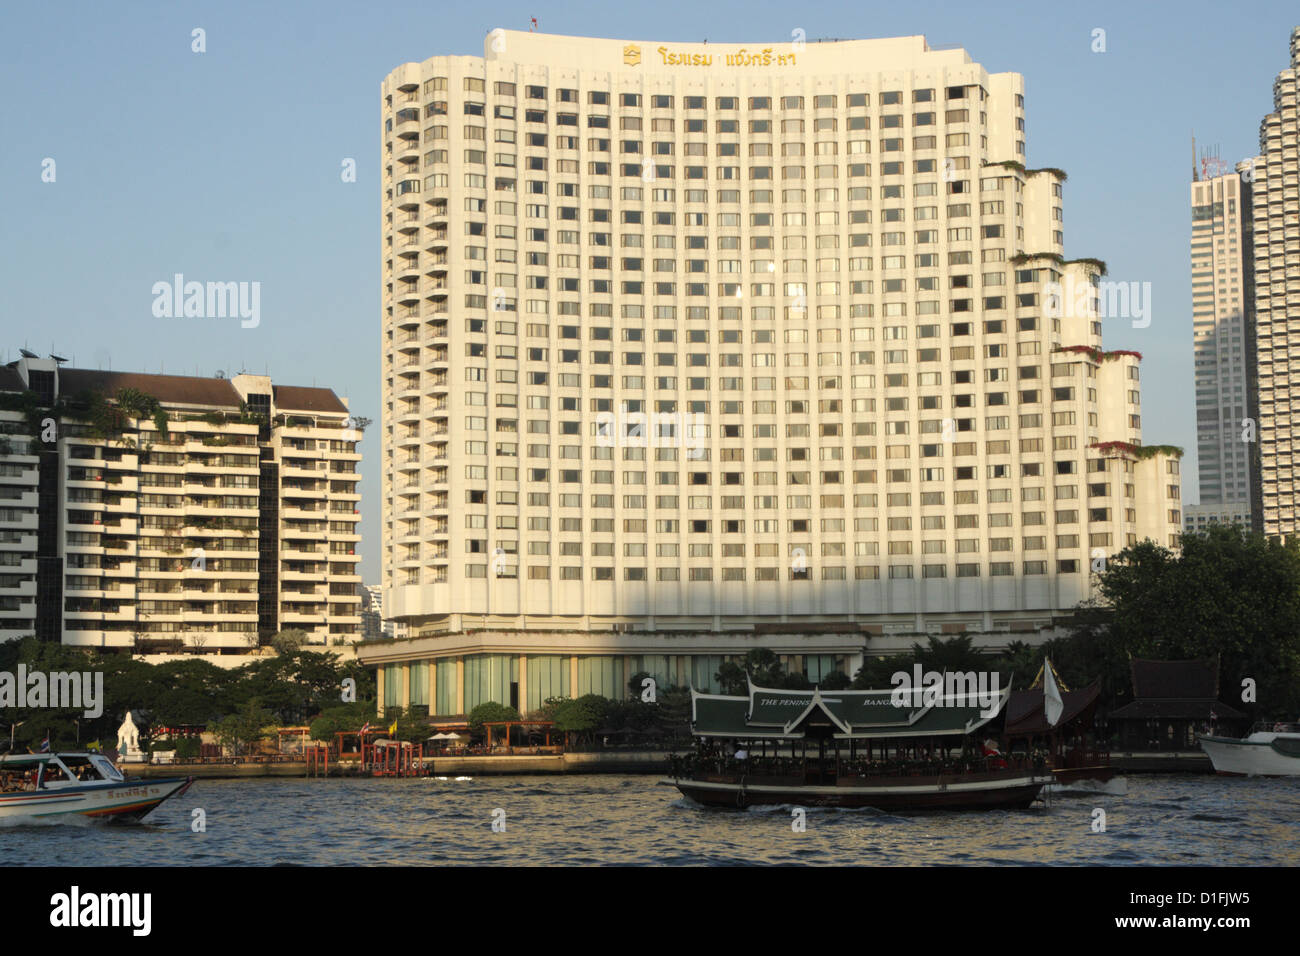 Shangri La Hotel On Chao Phraya River In Bangkok Thailand Stock Photo Alamy